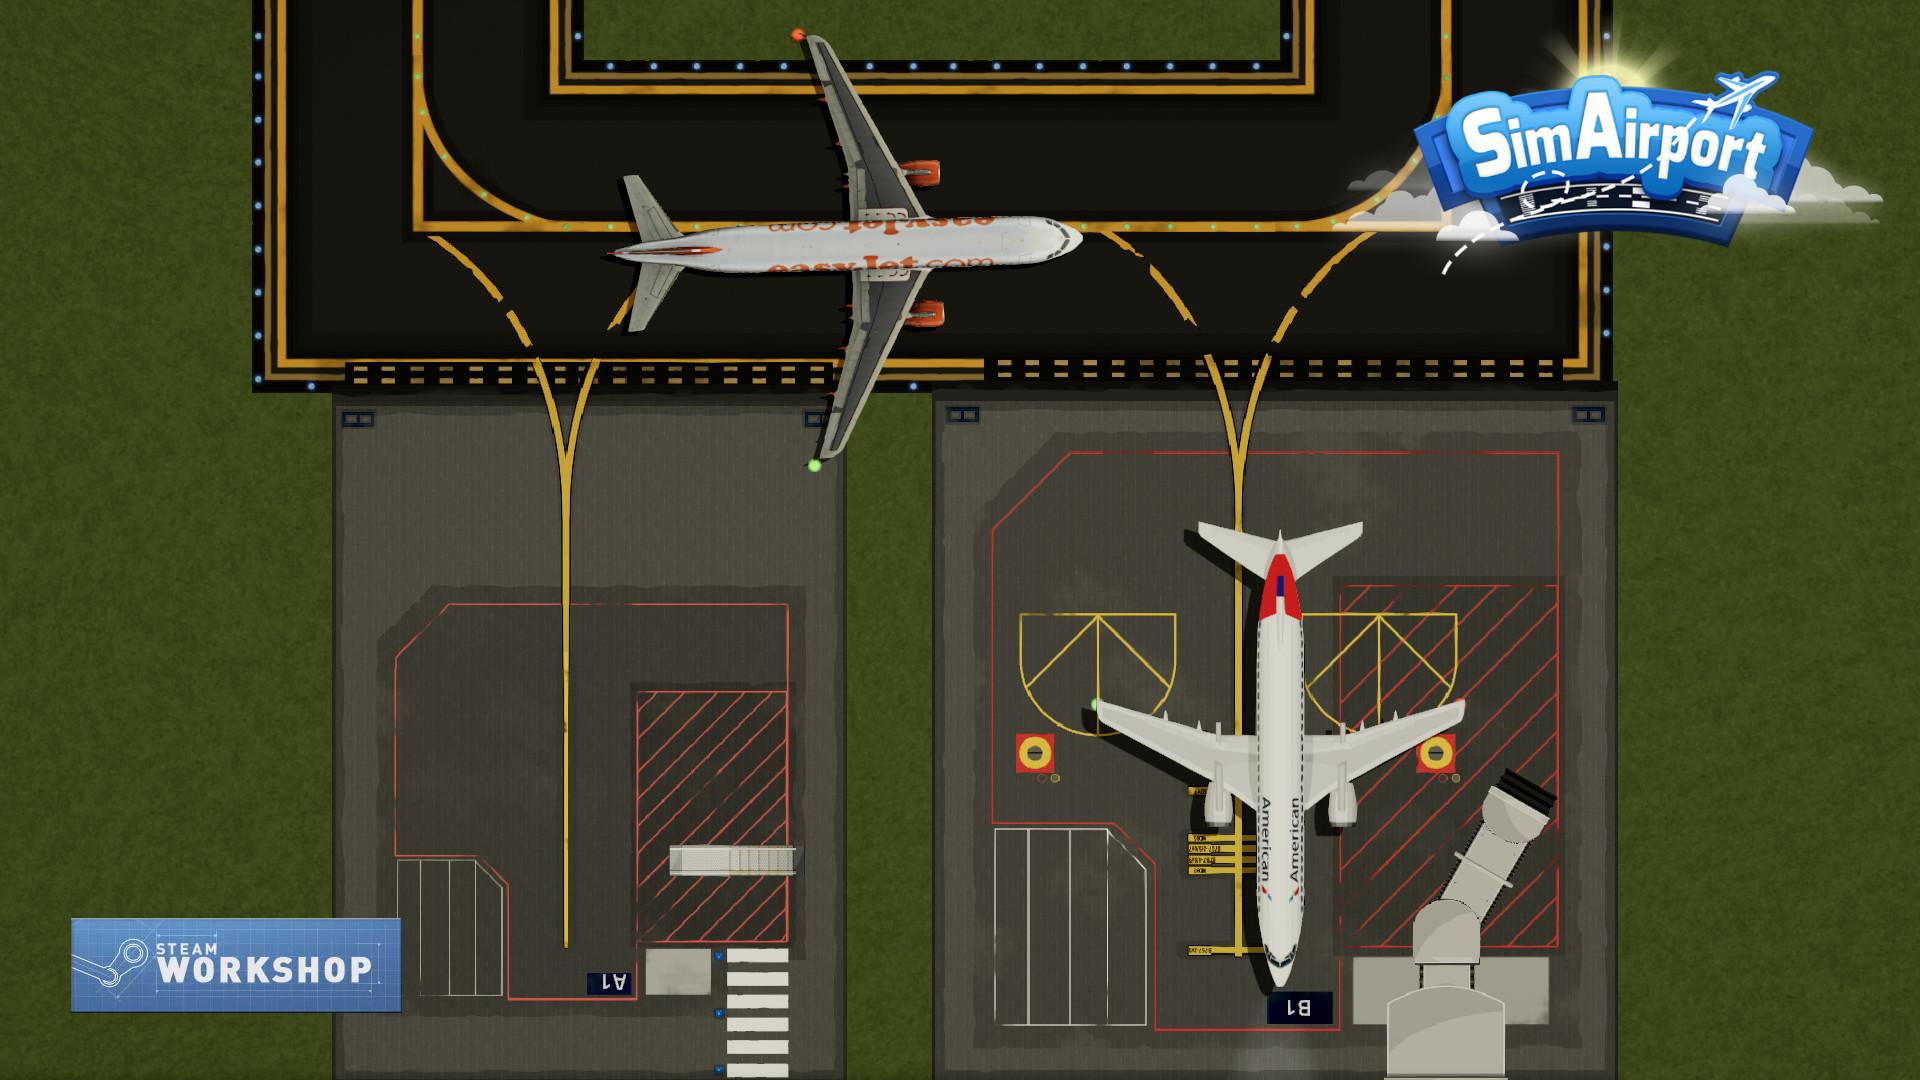 Screenshot №3 from game SimAirport